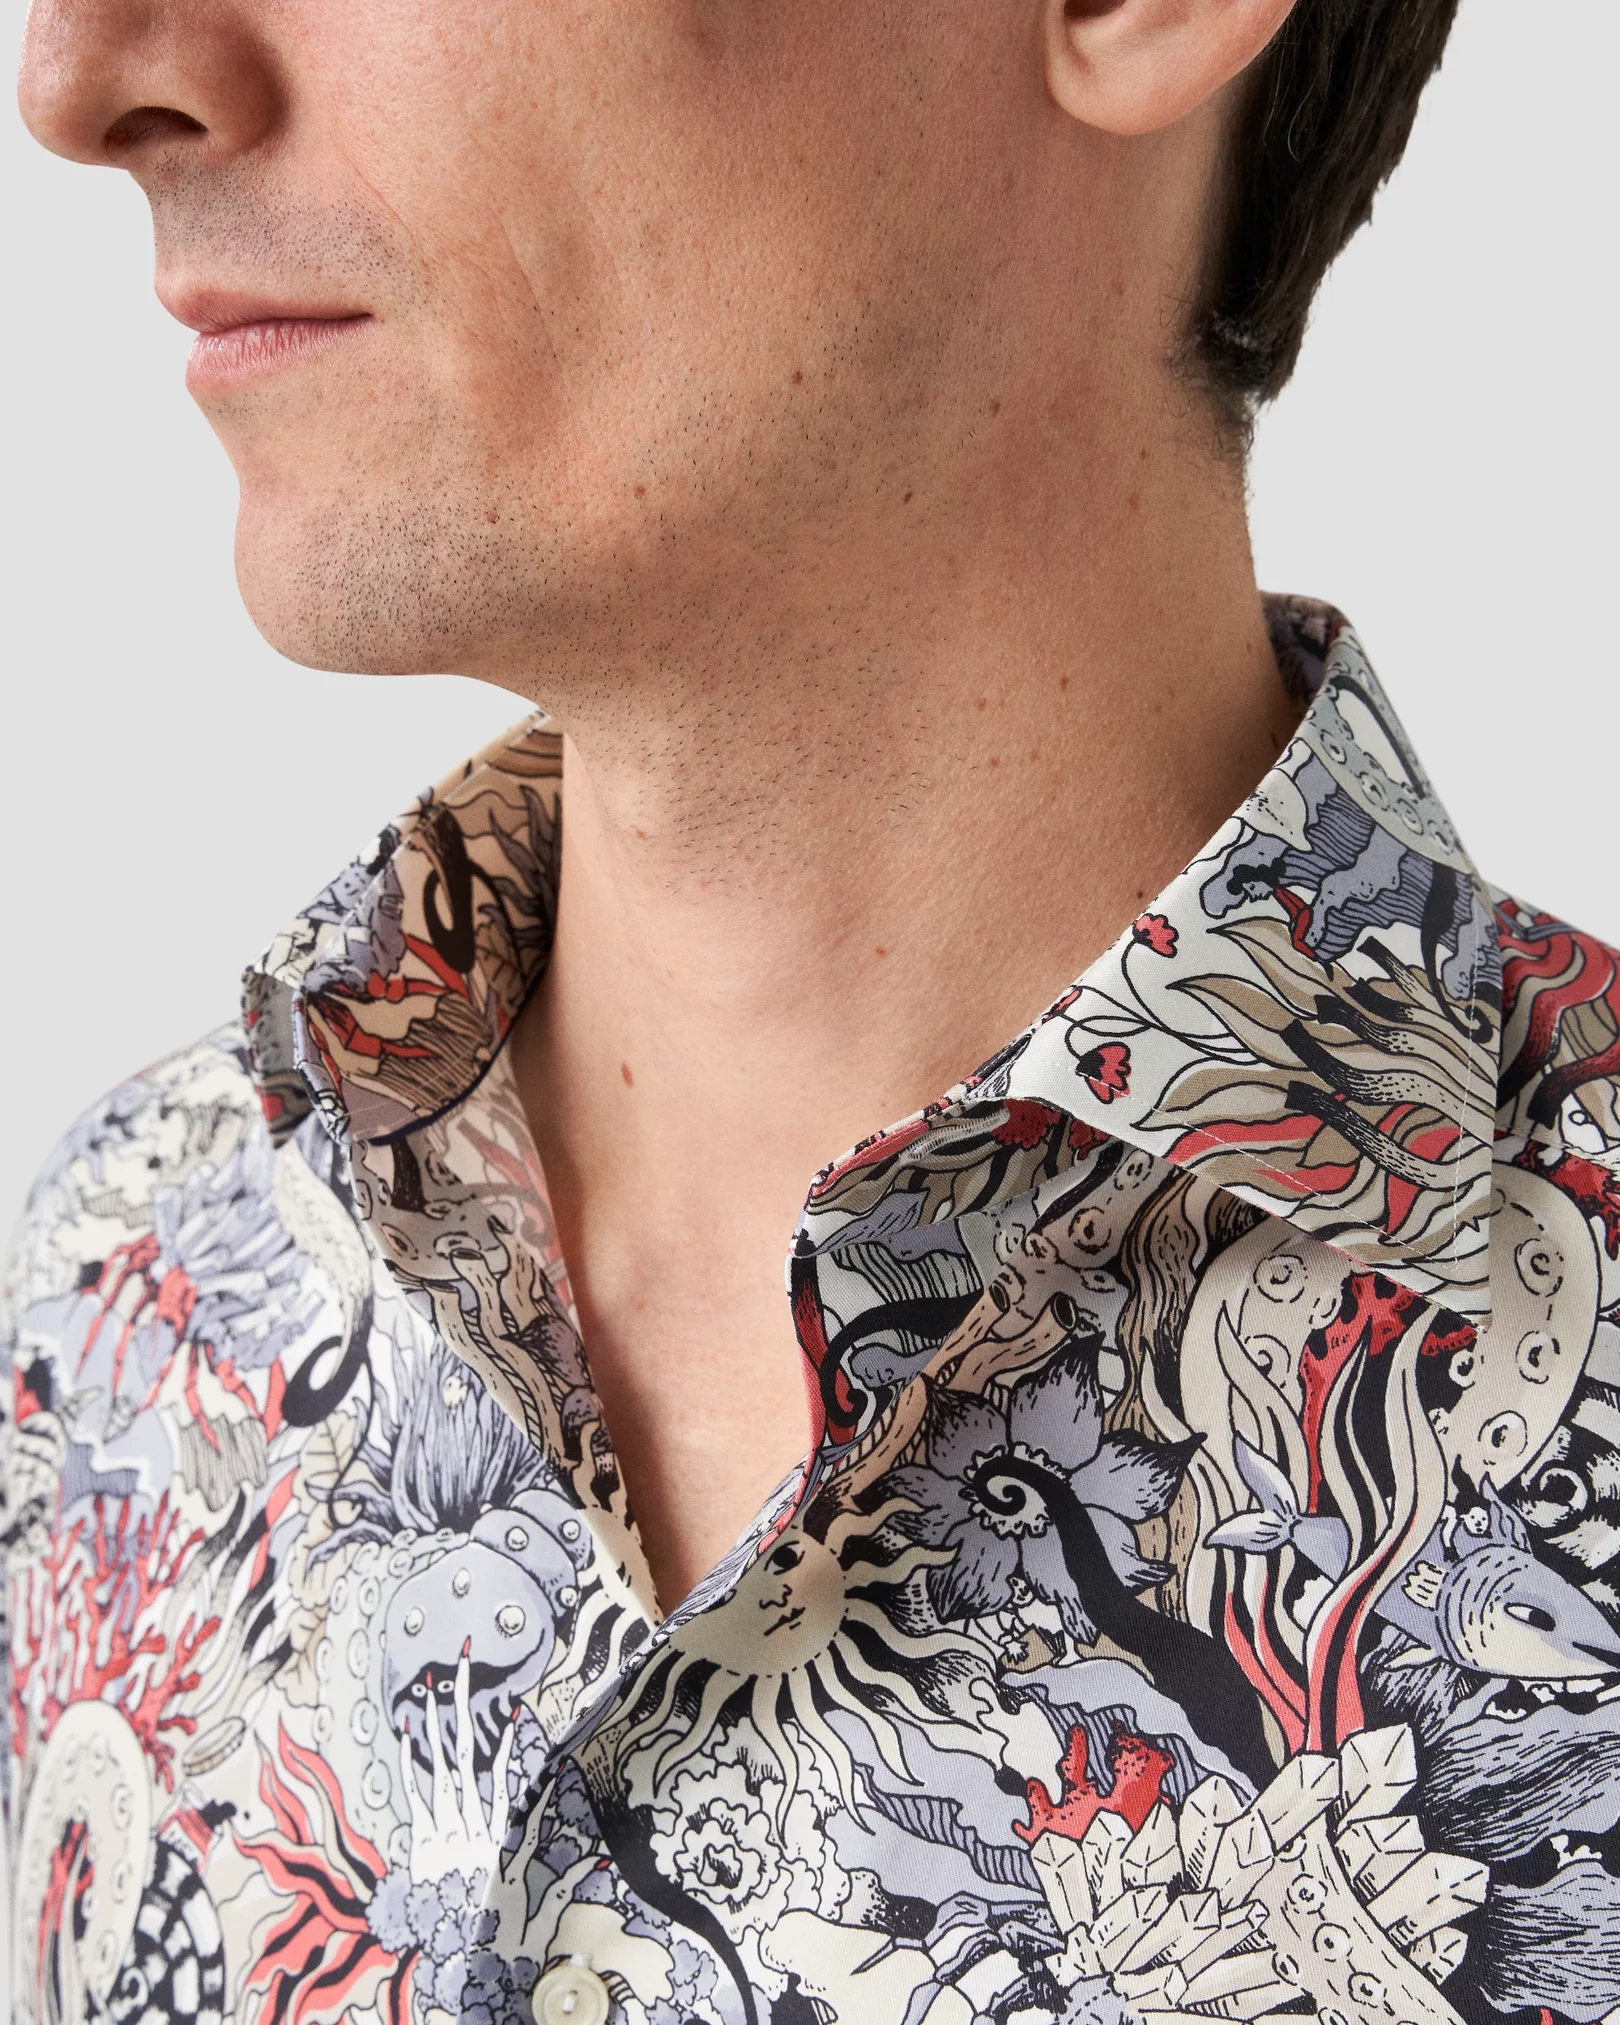 Eton - octupus garden shirt